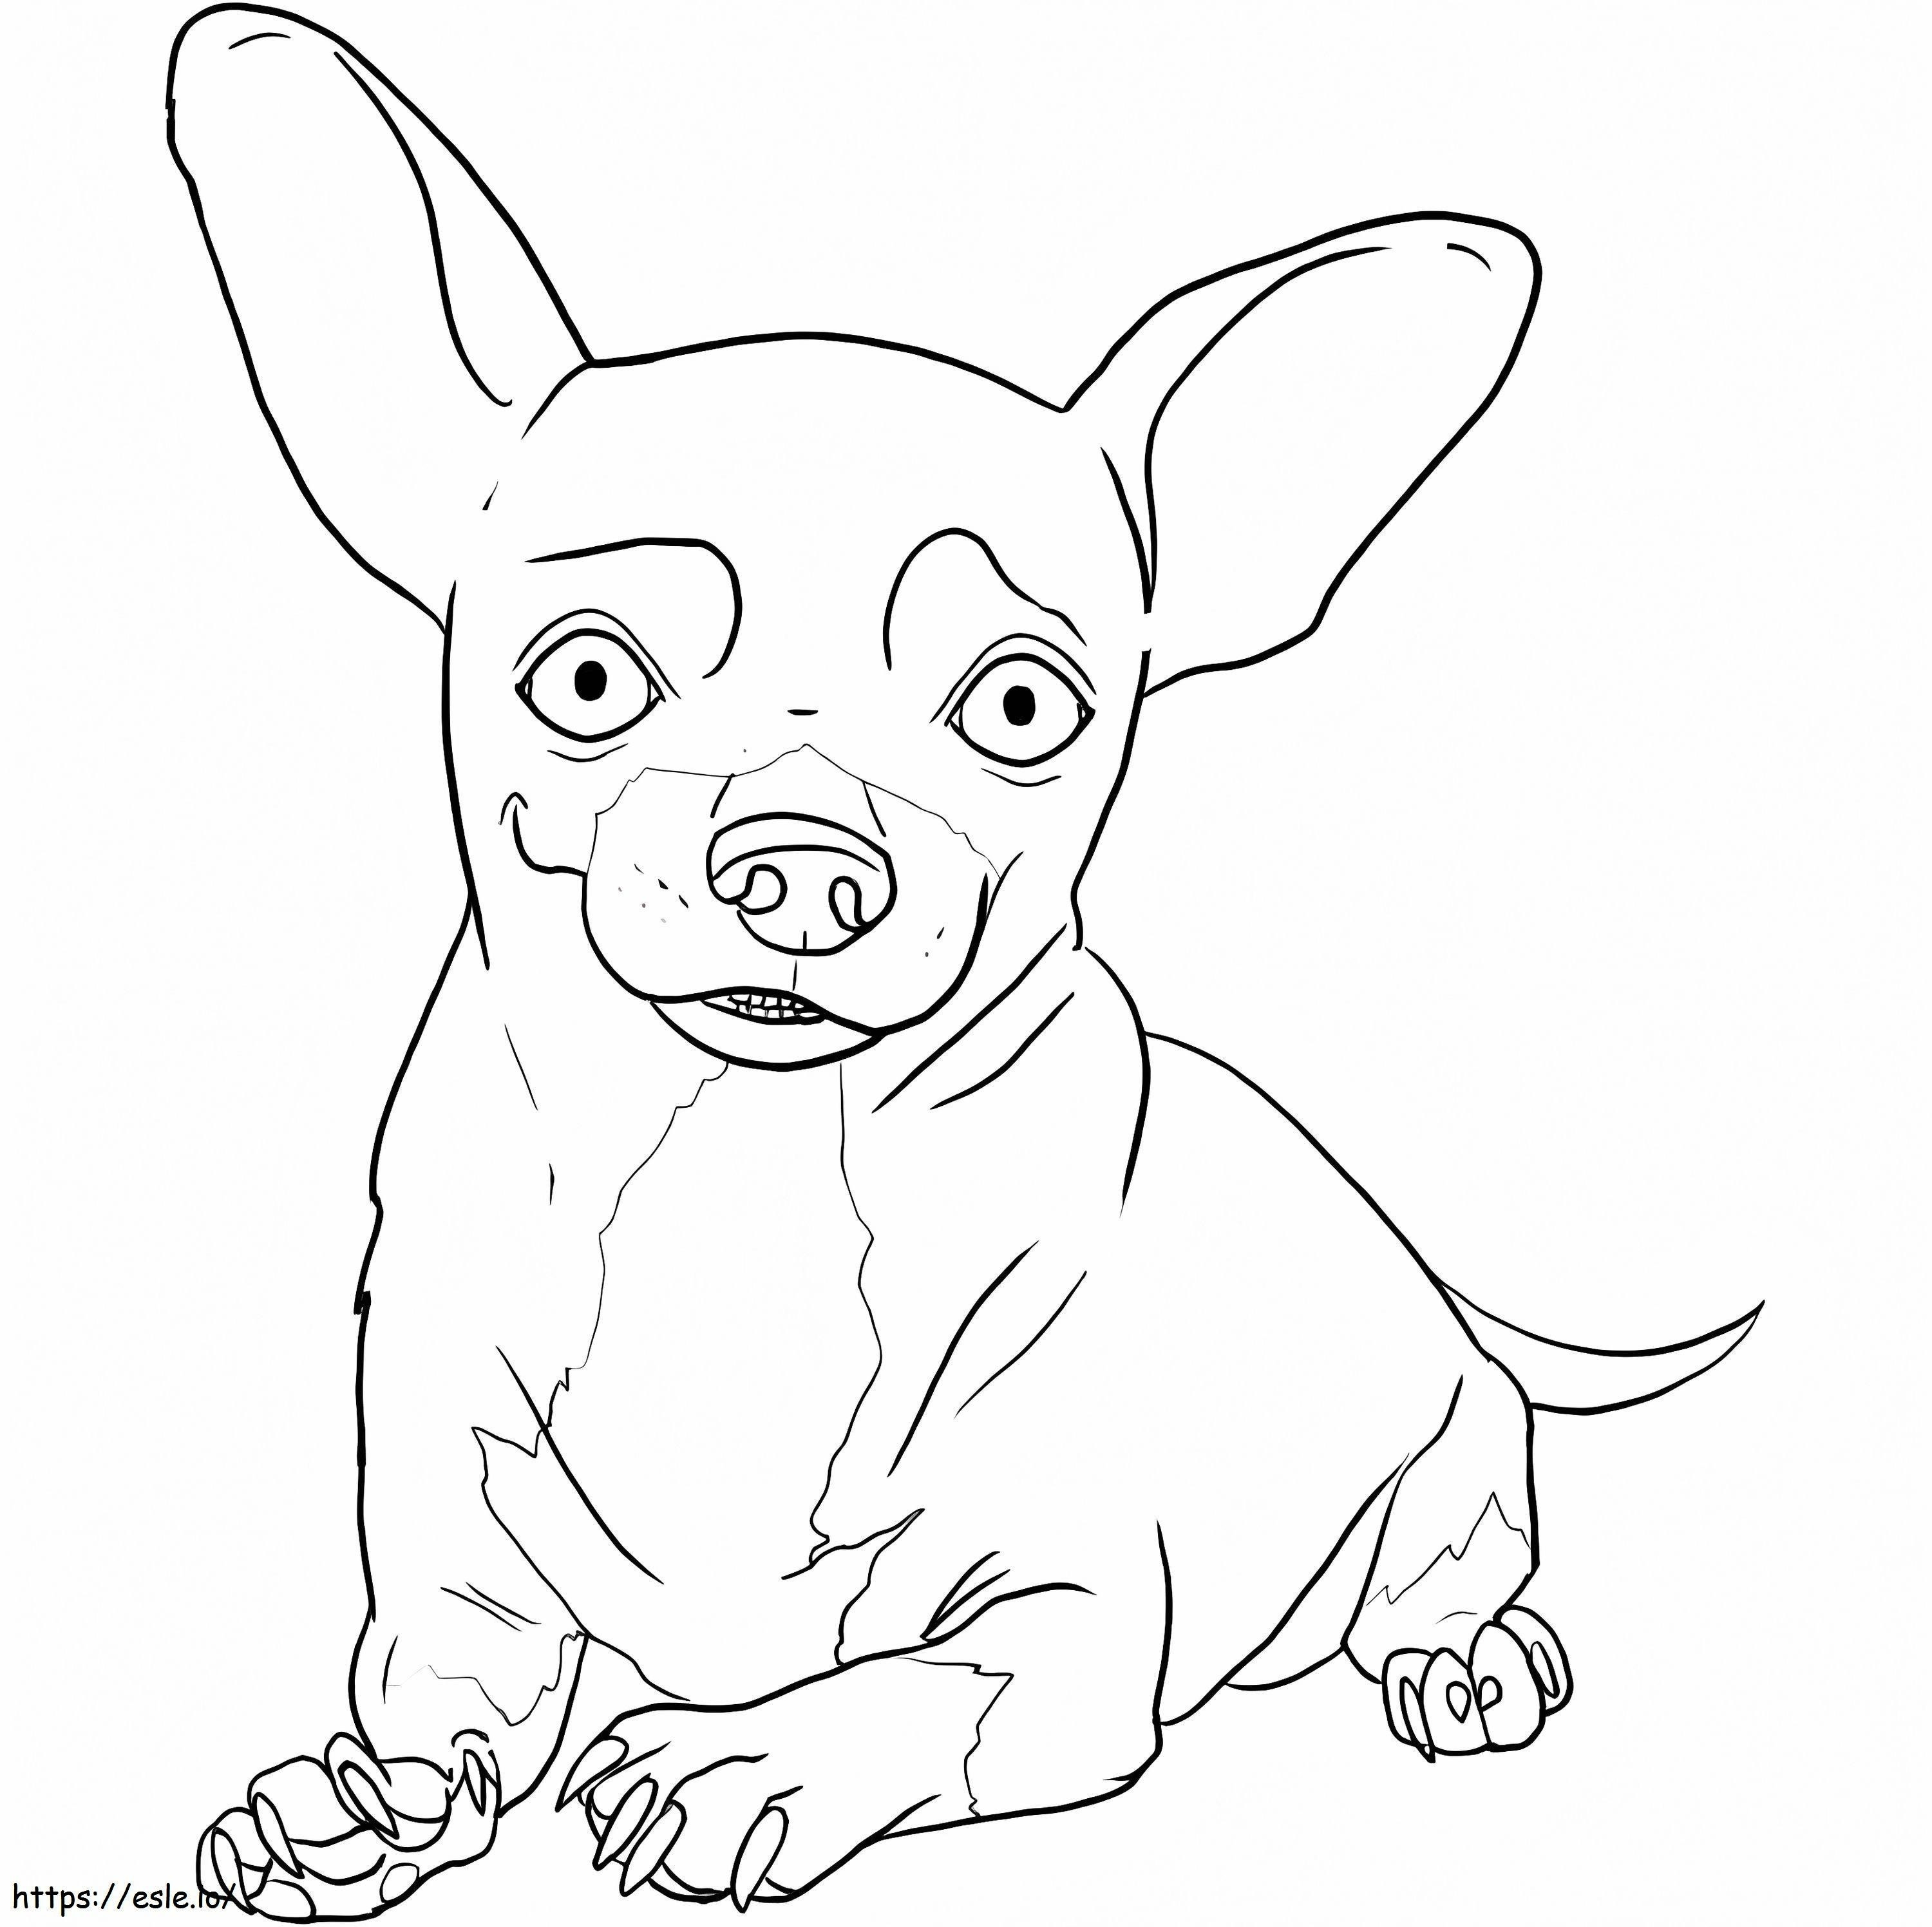 Chihuahua sieht lustig aus ausmalbilder